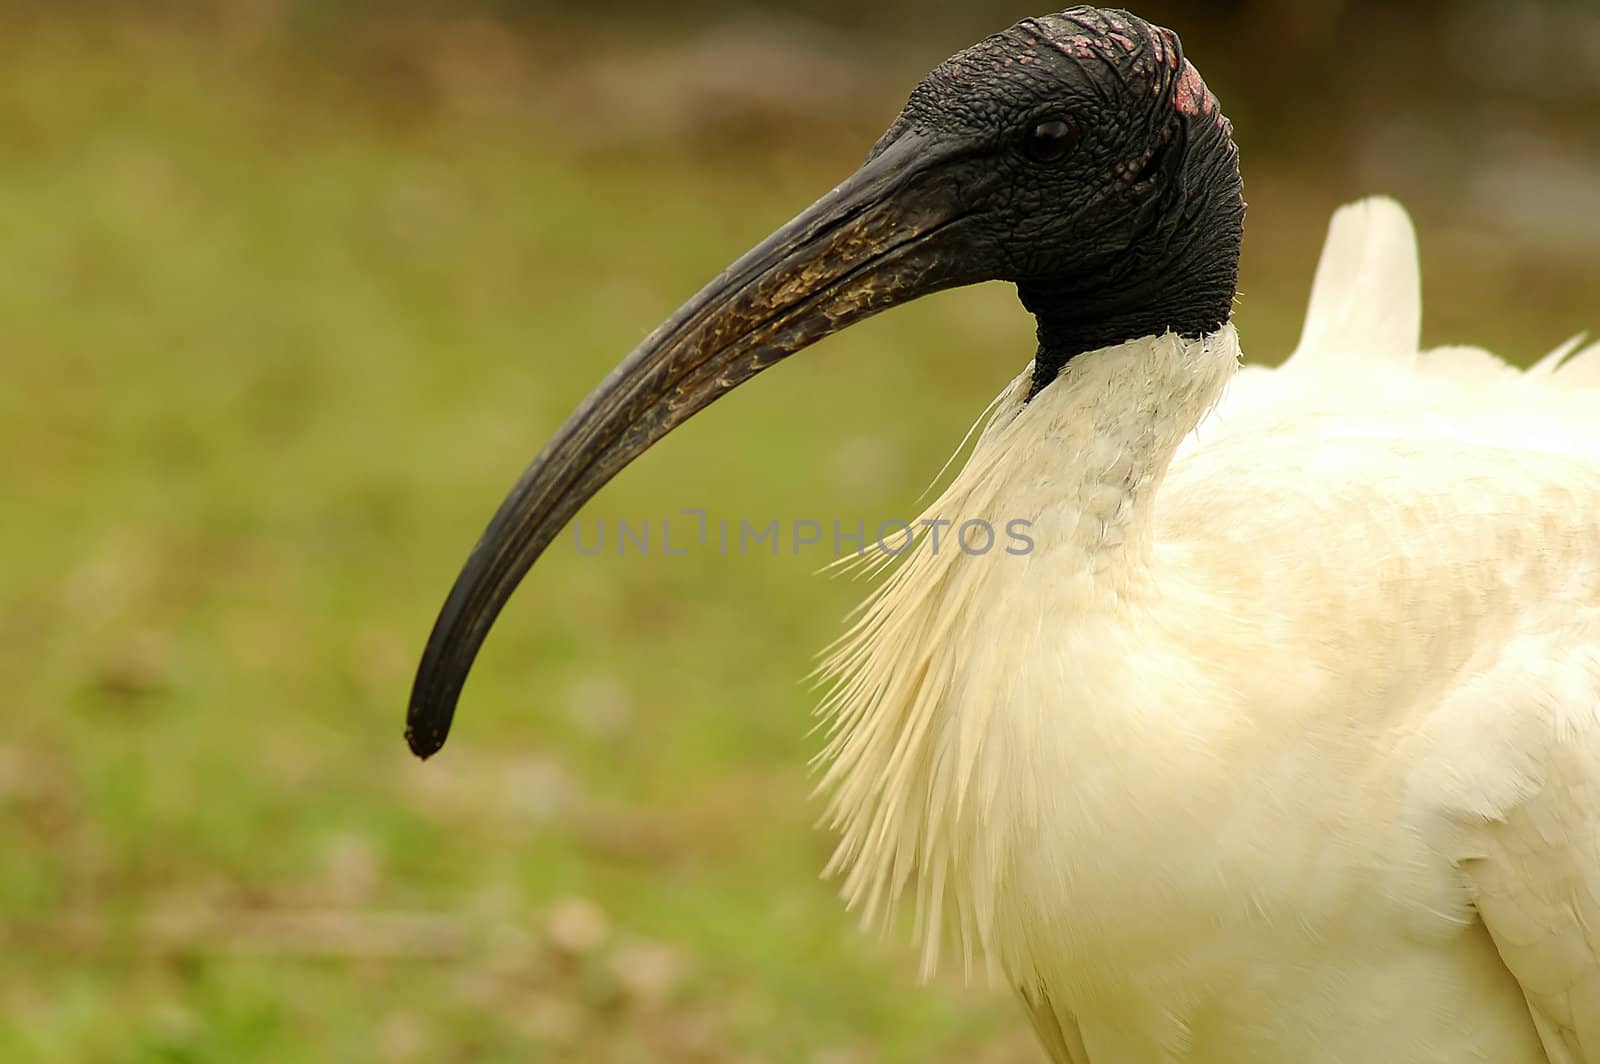 detail photo of australian white ibis, grass blurred in background